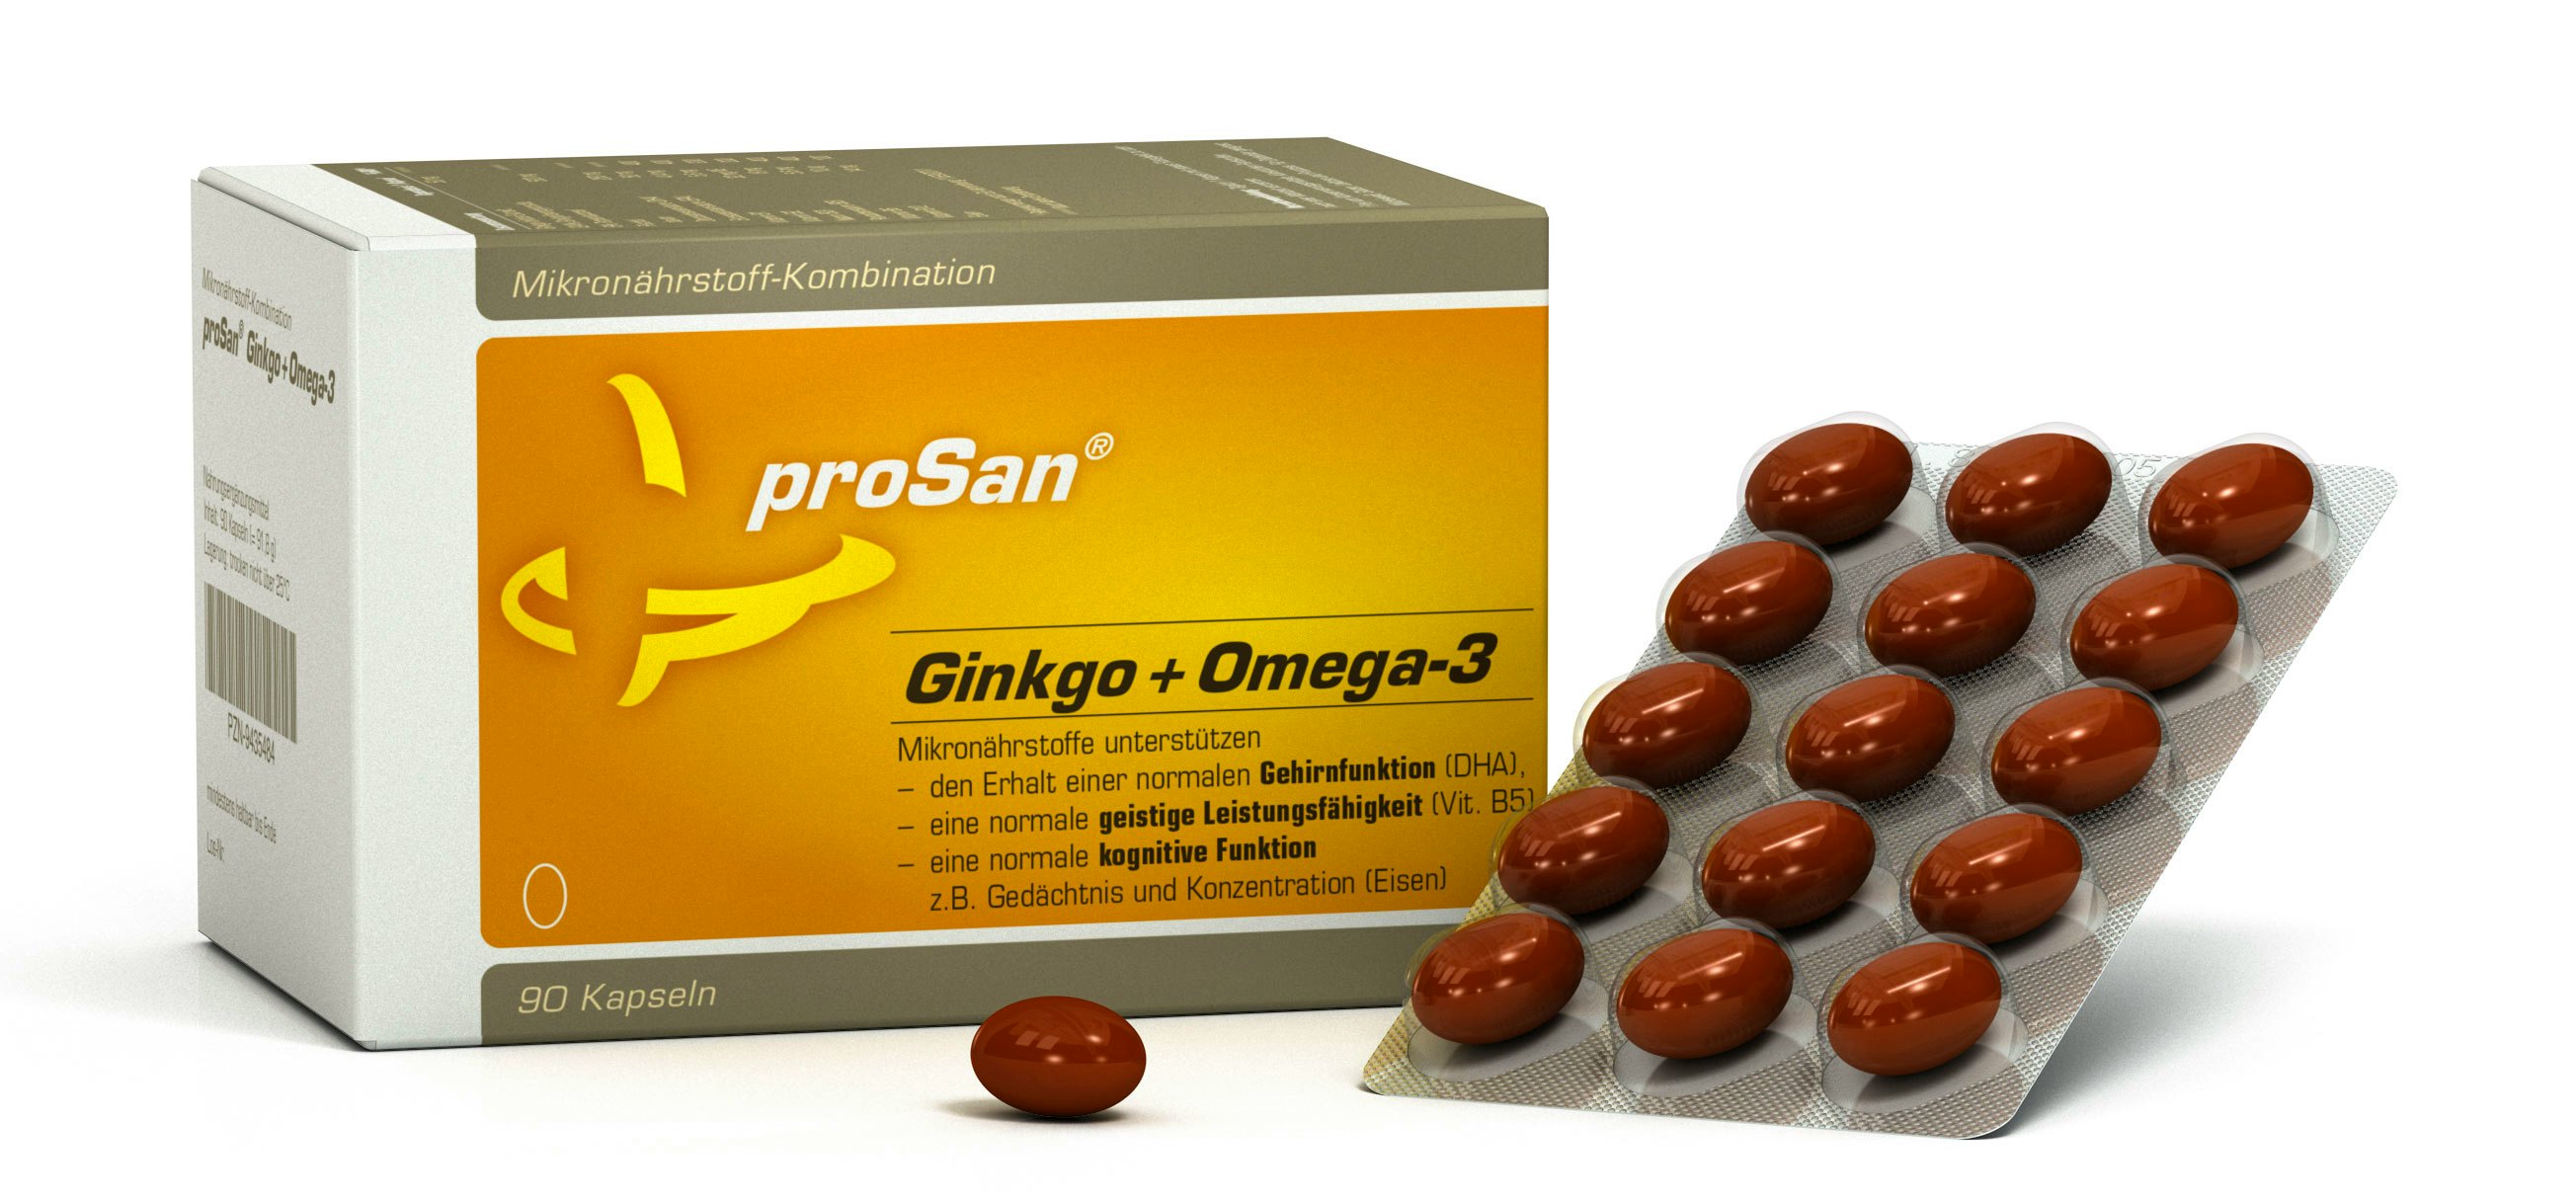 proSan Ginkgo+Omega-3 (90 Kapseln)